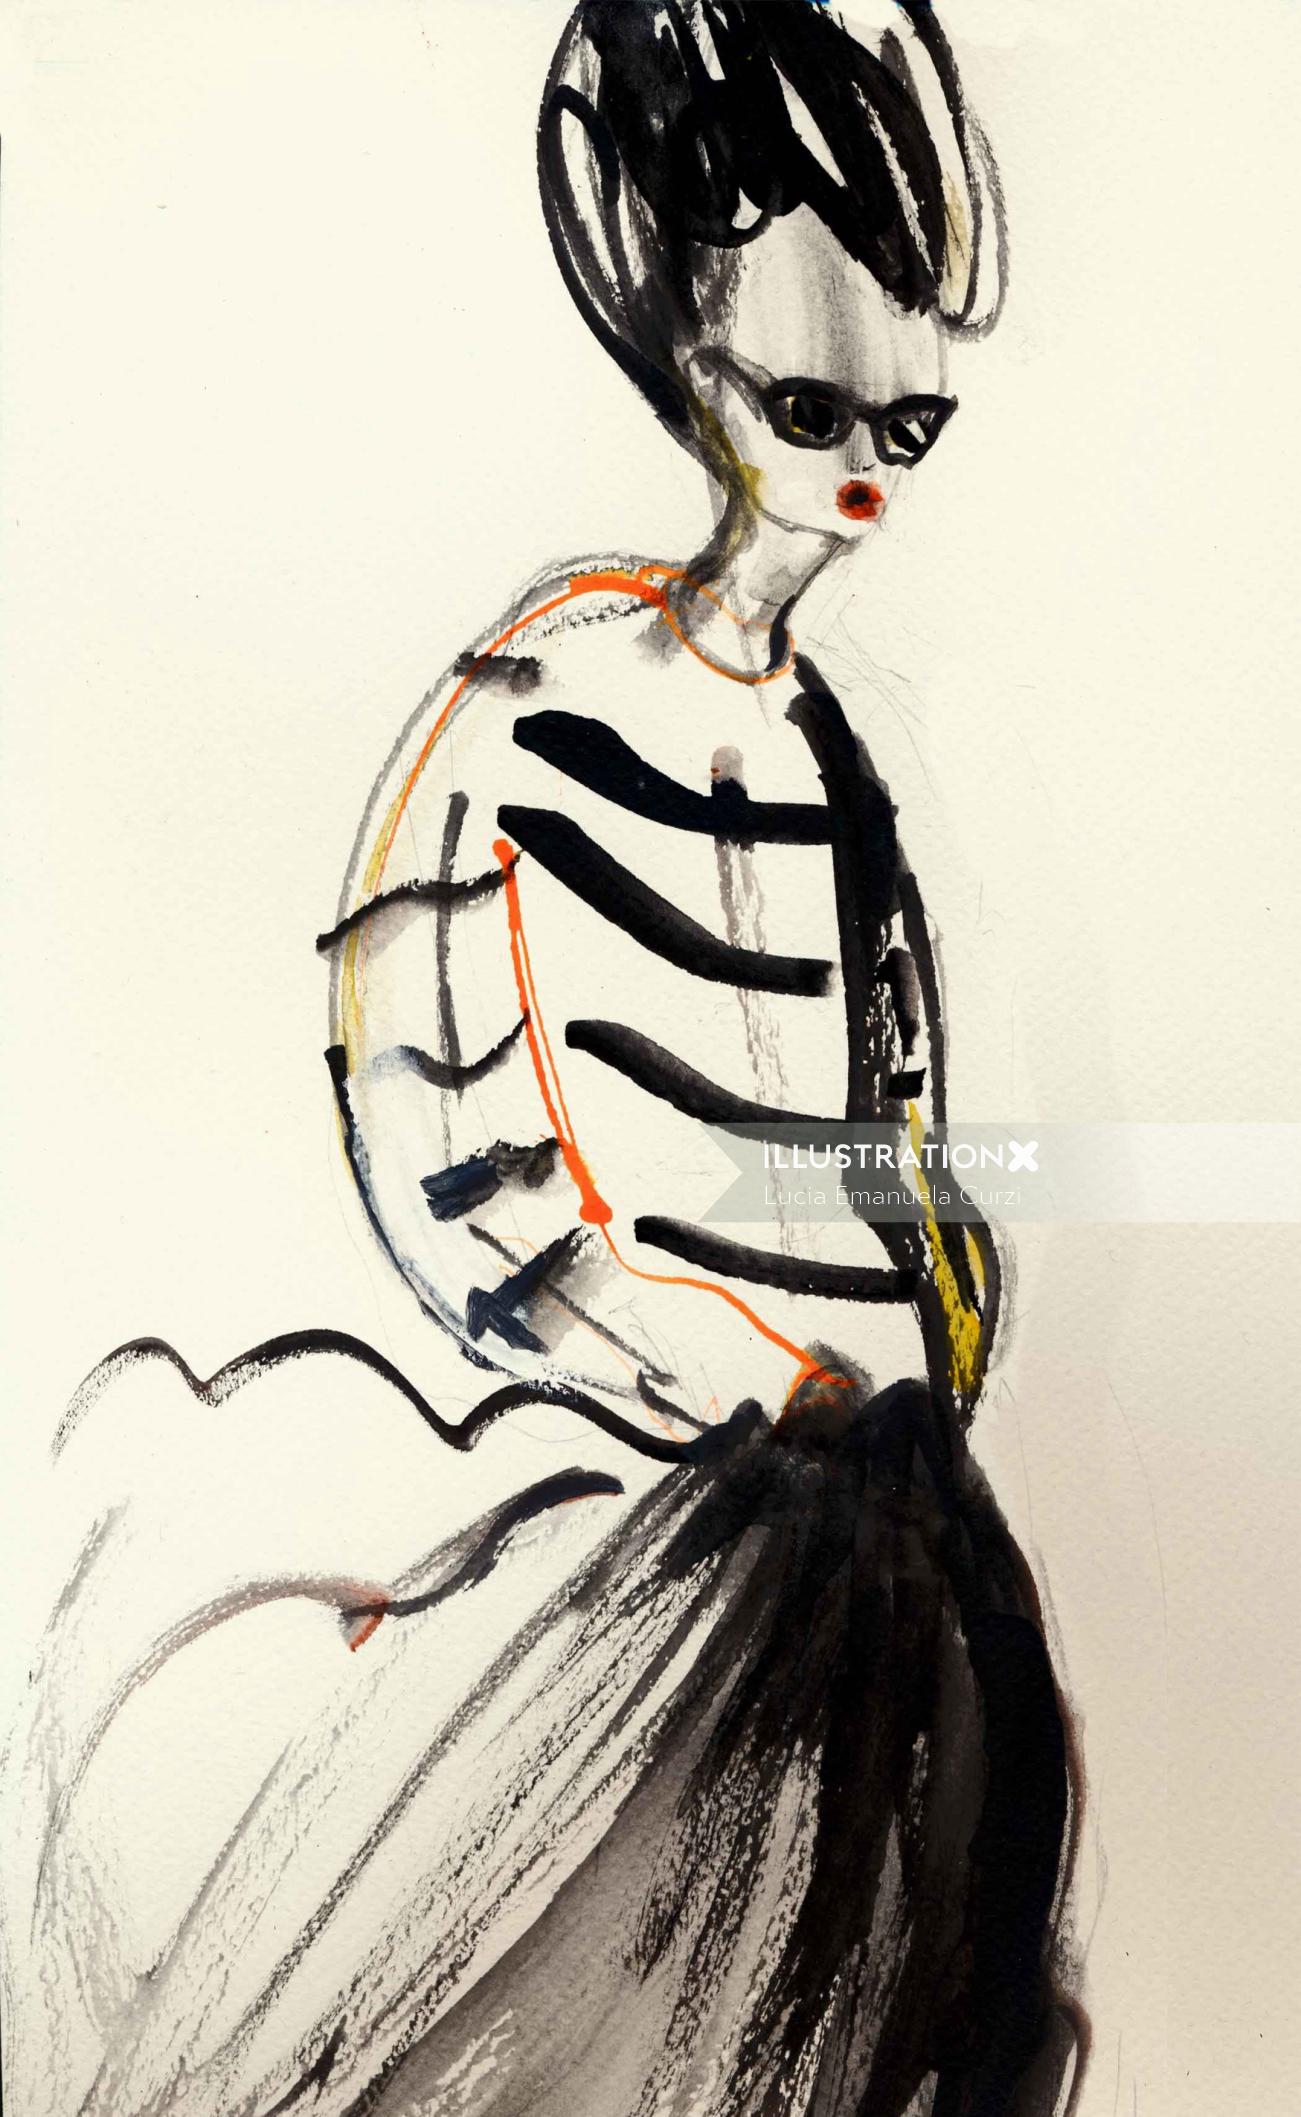 Lucia Emanuela Curzi, International Fashion & Beauty illustrator